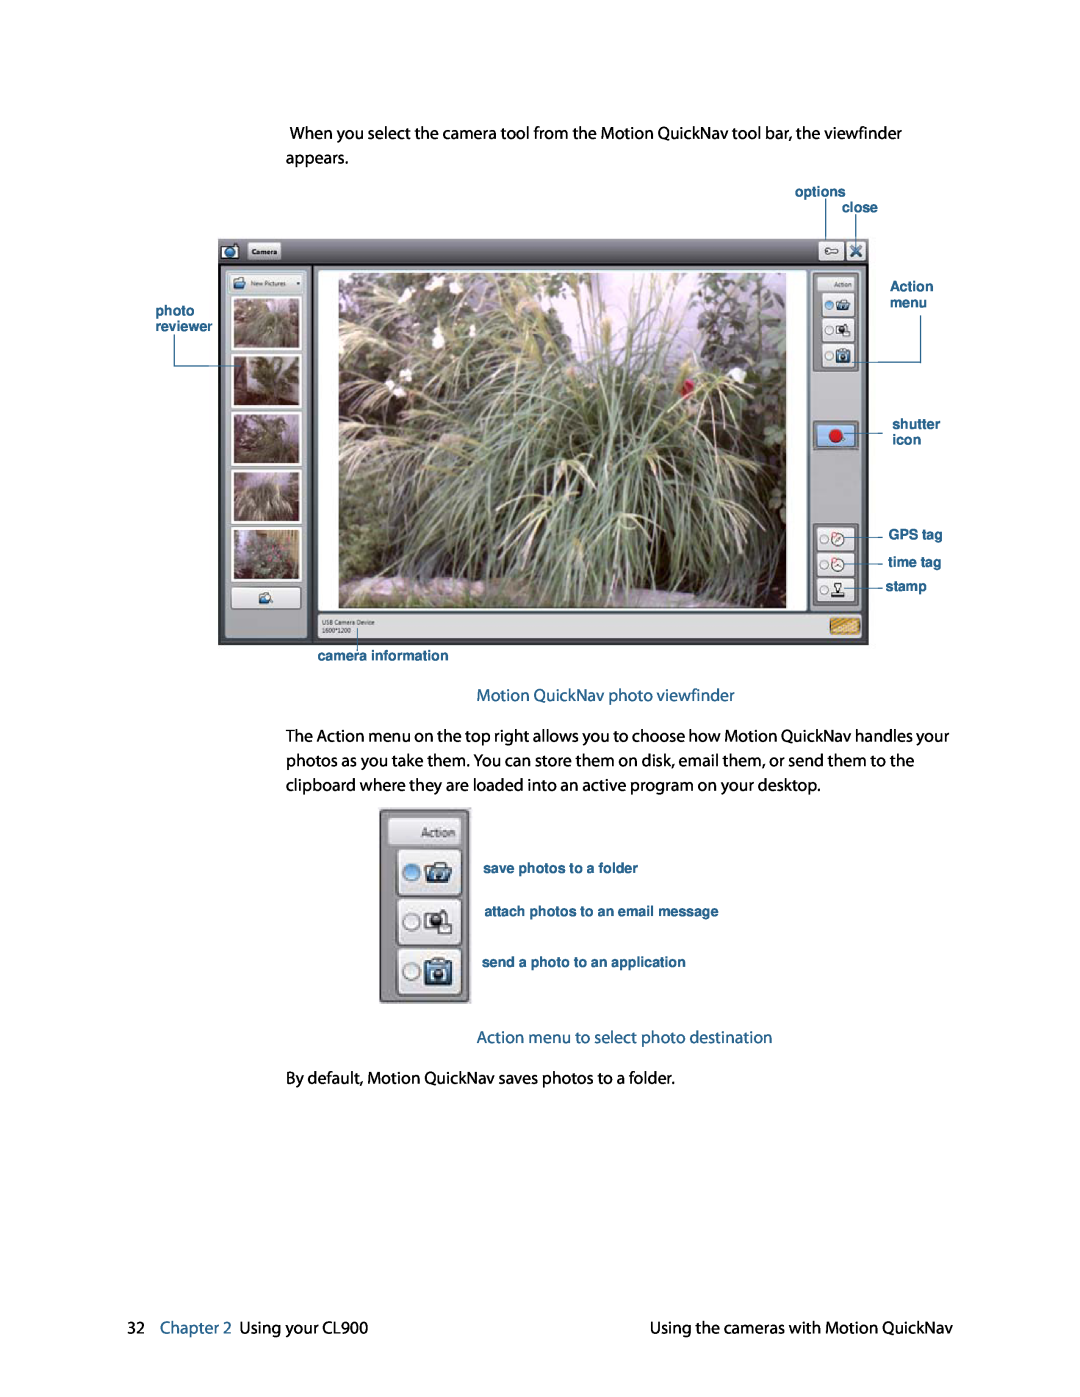 Motion FWS-001 manual Motion QuickNav photo viewfinder, Action menu to select photo destination 